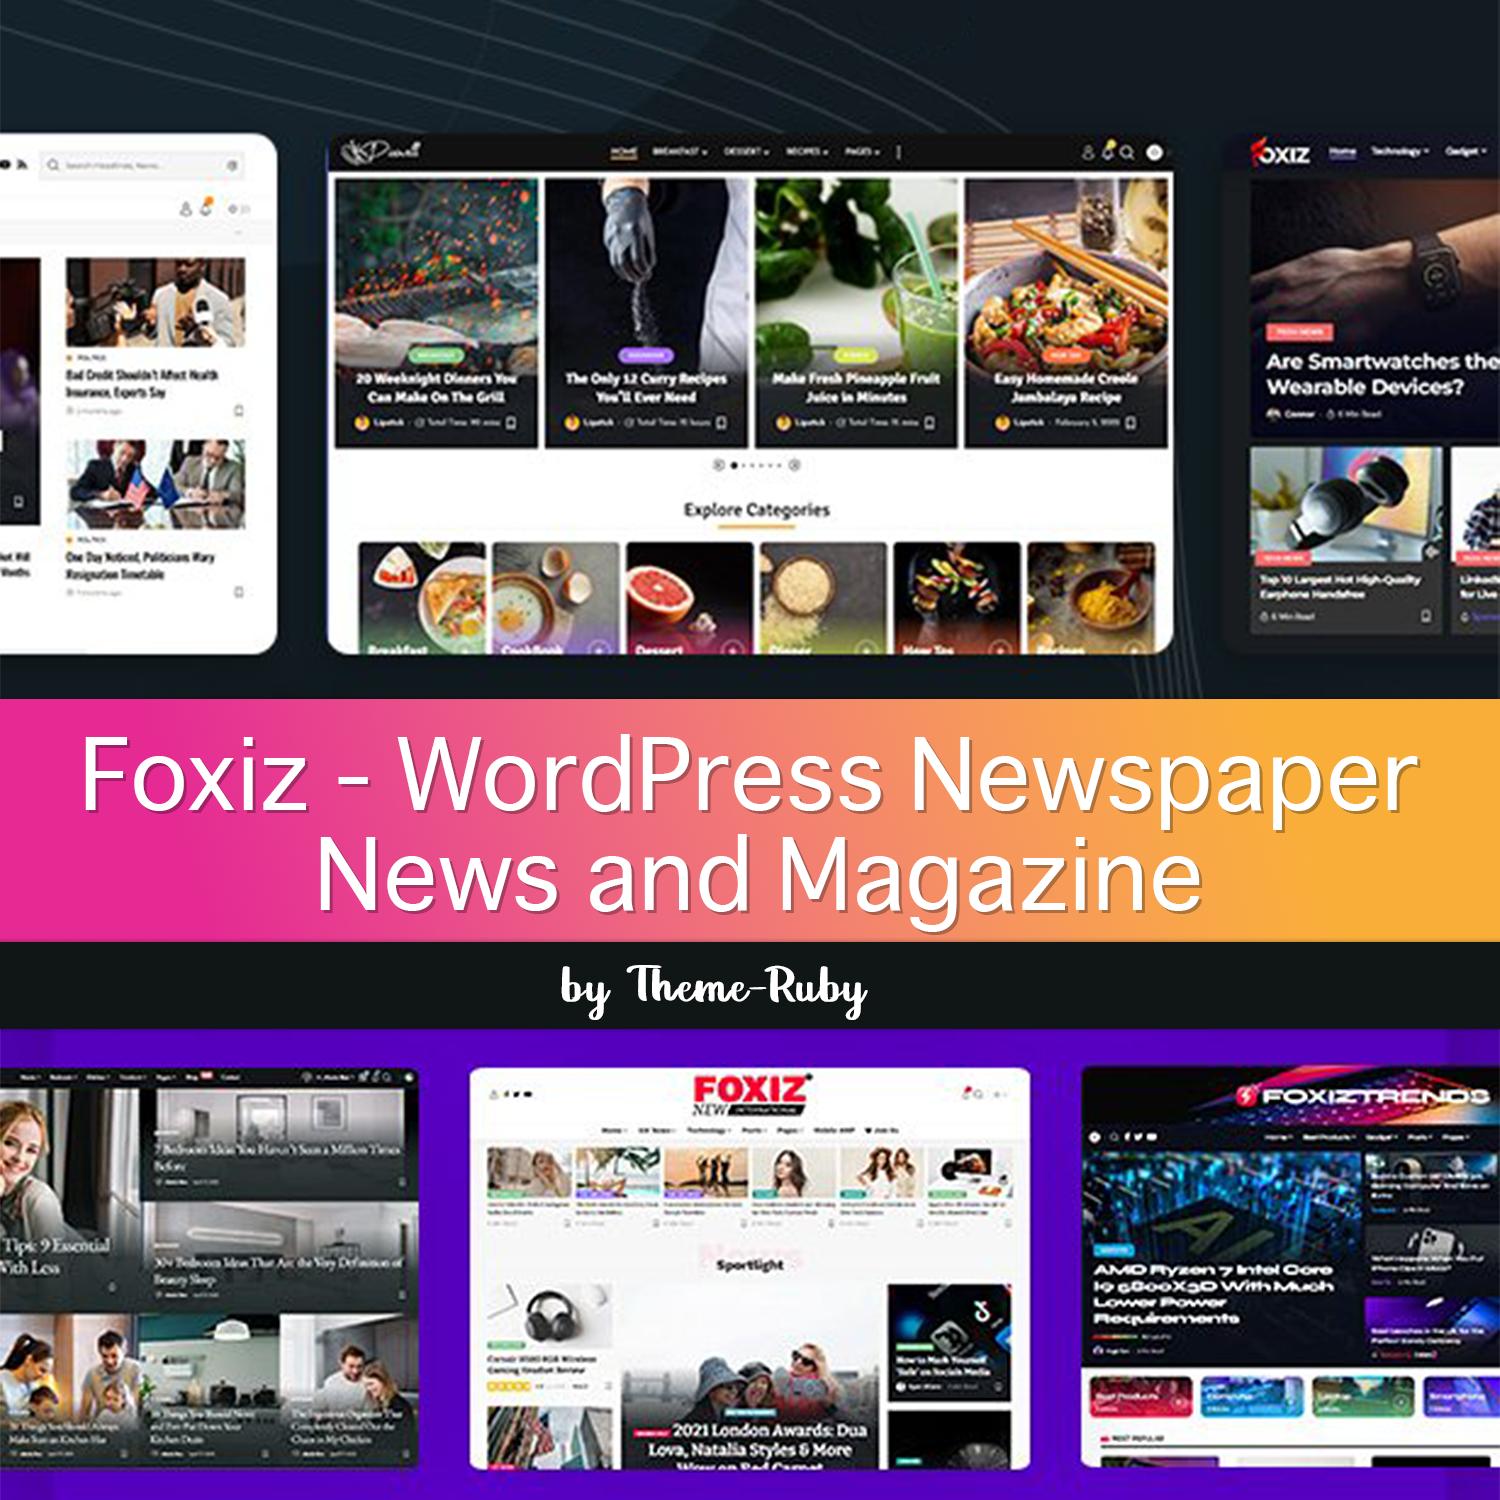 Images with foxiz wordpress newspaper news and magazine.